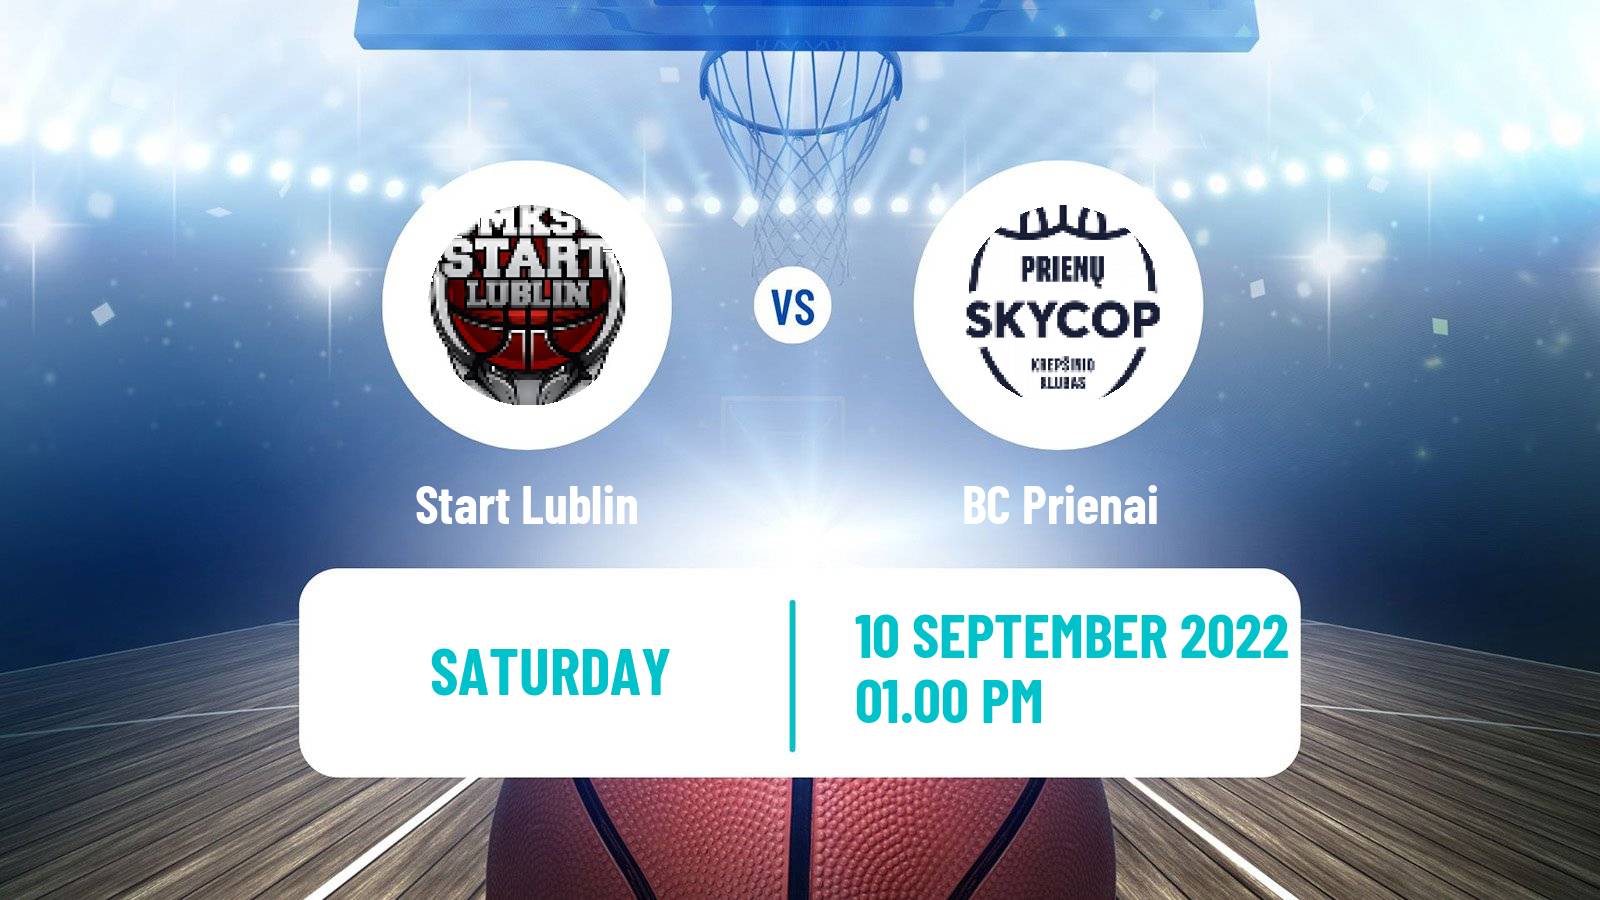 Basketball Club Friendly Basketball Start Lublin - Prienai